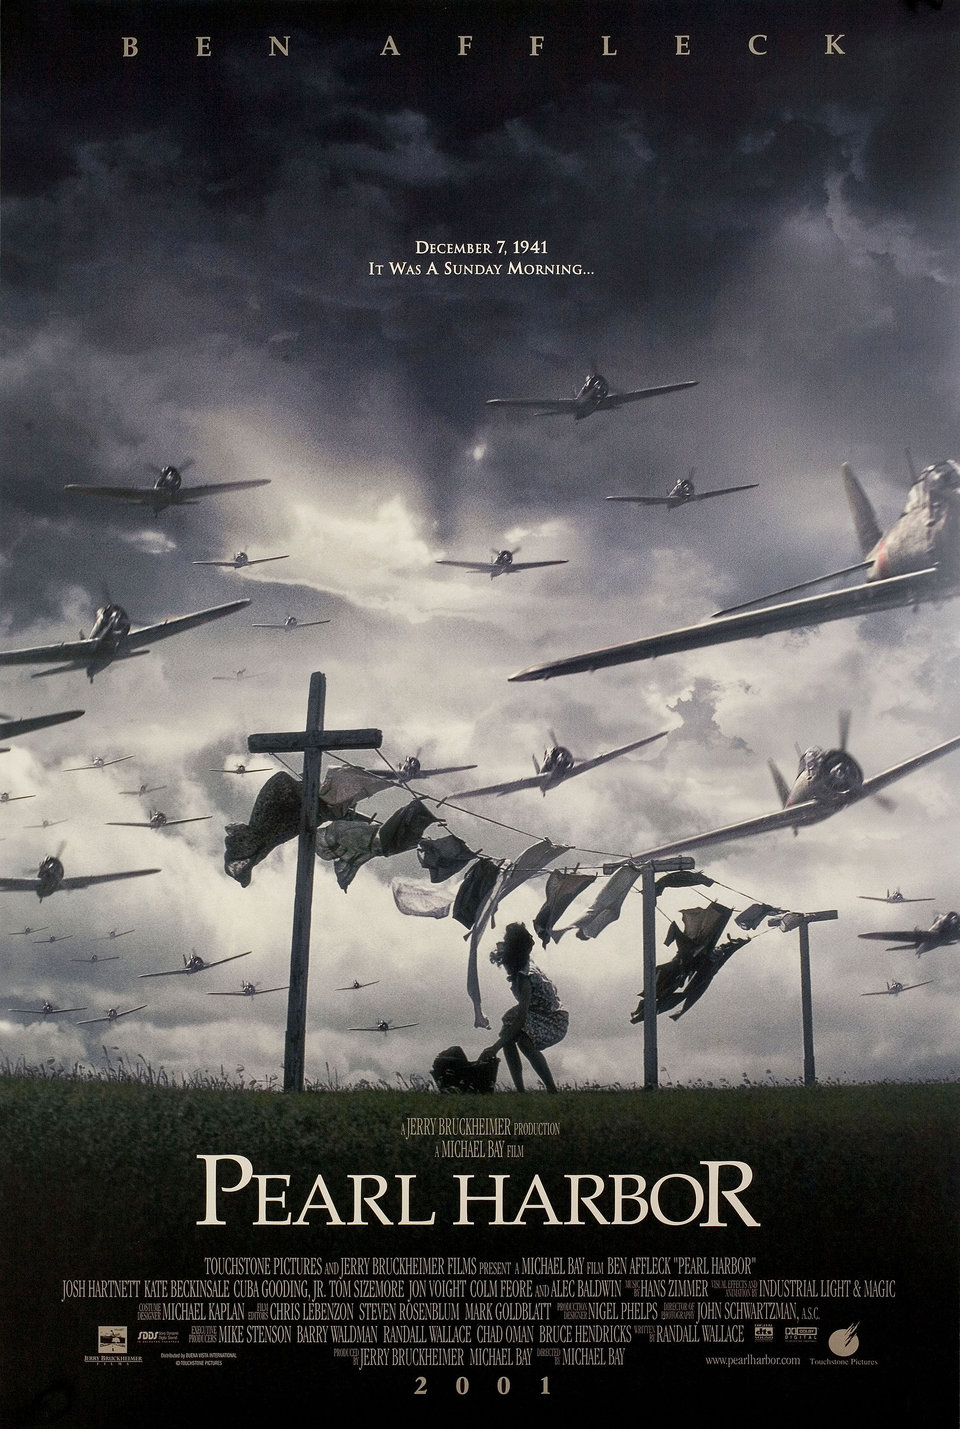 Pearl Harbor Part 1 DVD 2004 Pearl Harbor I. rész - Birodalmak összecsapása  / Historical WWII documentary about the attack on Pearl Harbor / Clash of  Empires - Bible in My Language